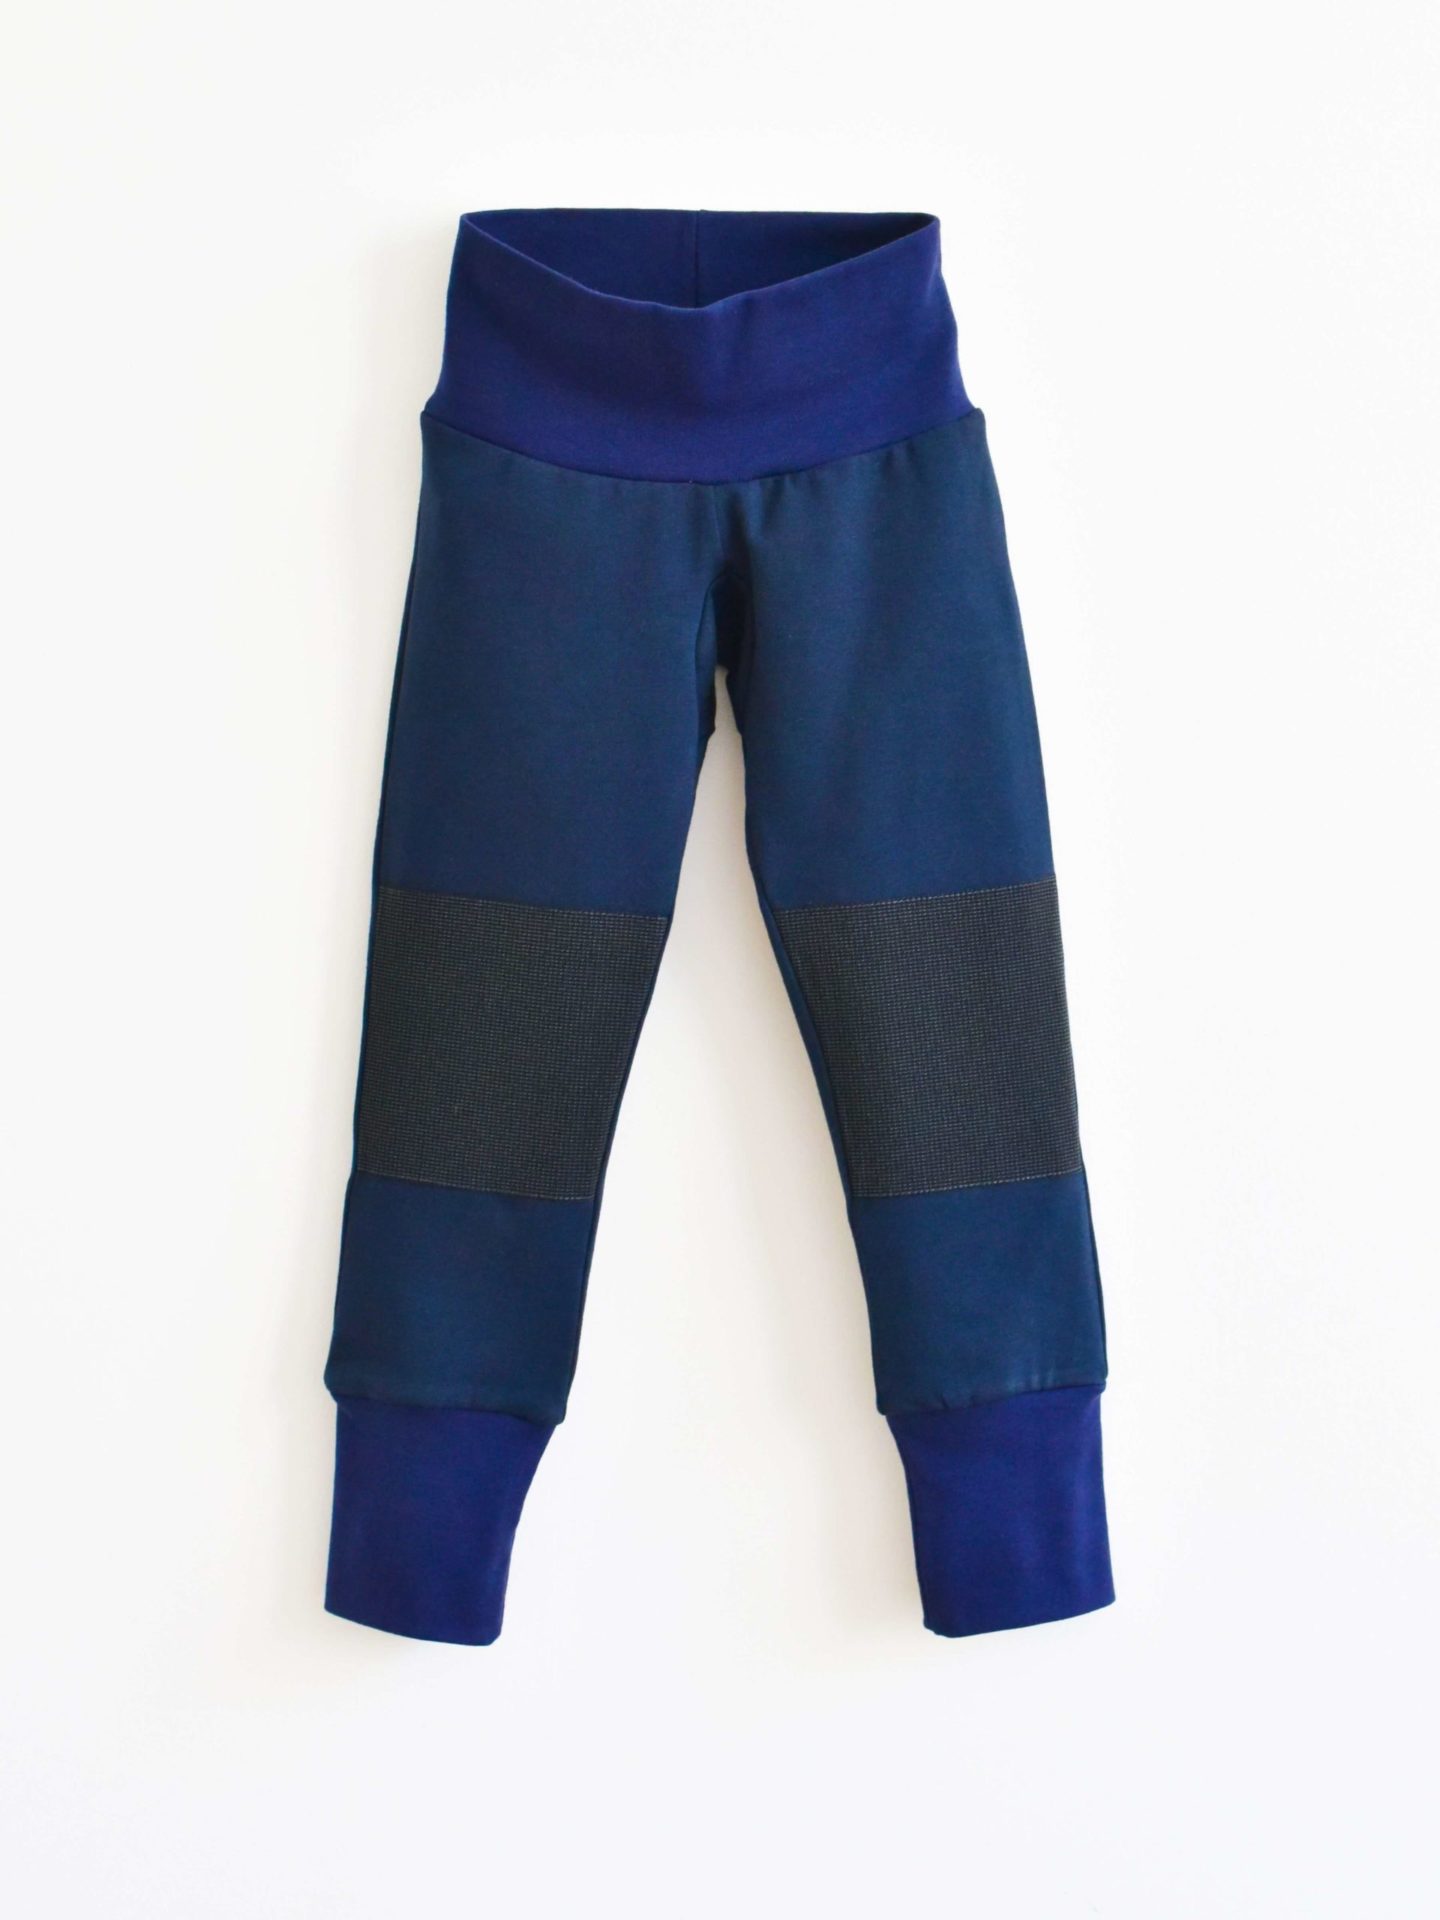 100 Merino Wool Leggings for Men - Thermal Underwear Pants - Fitness Outdoor  | eBay